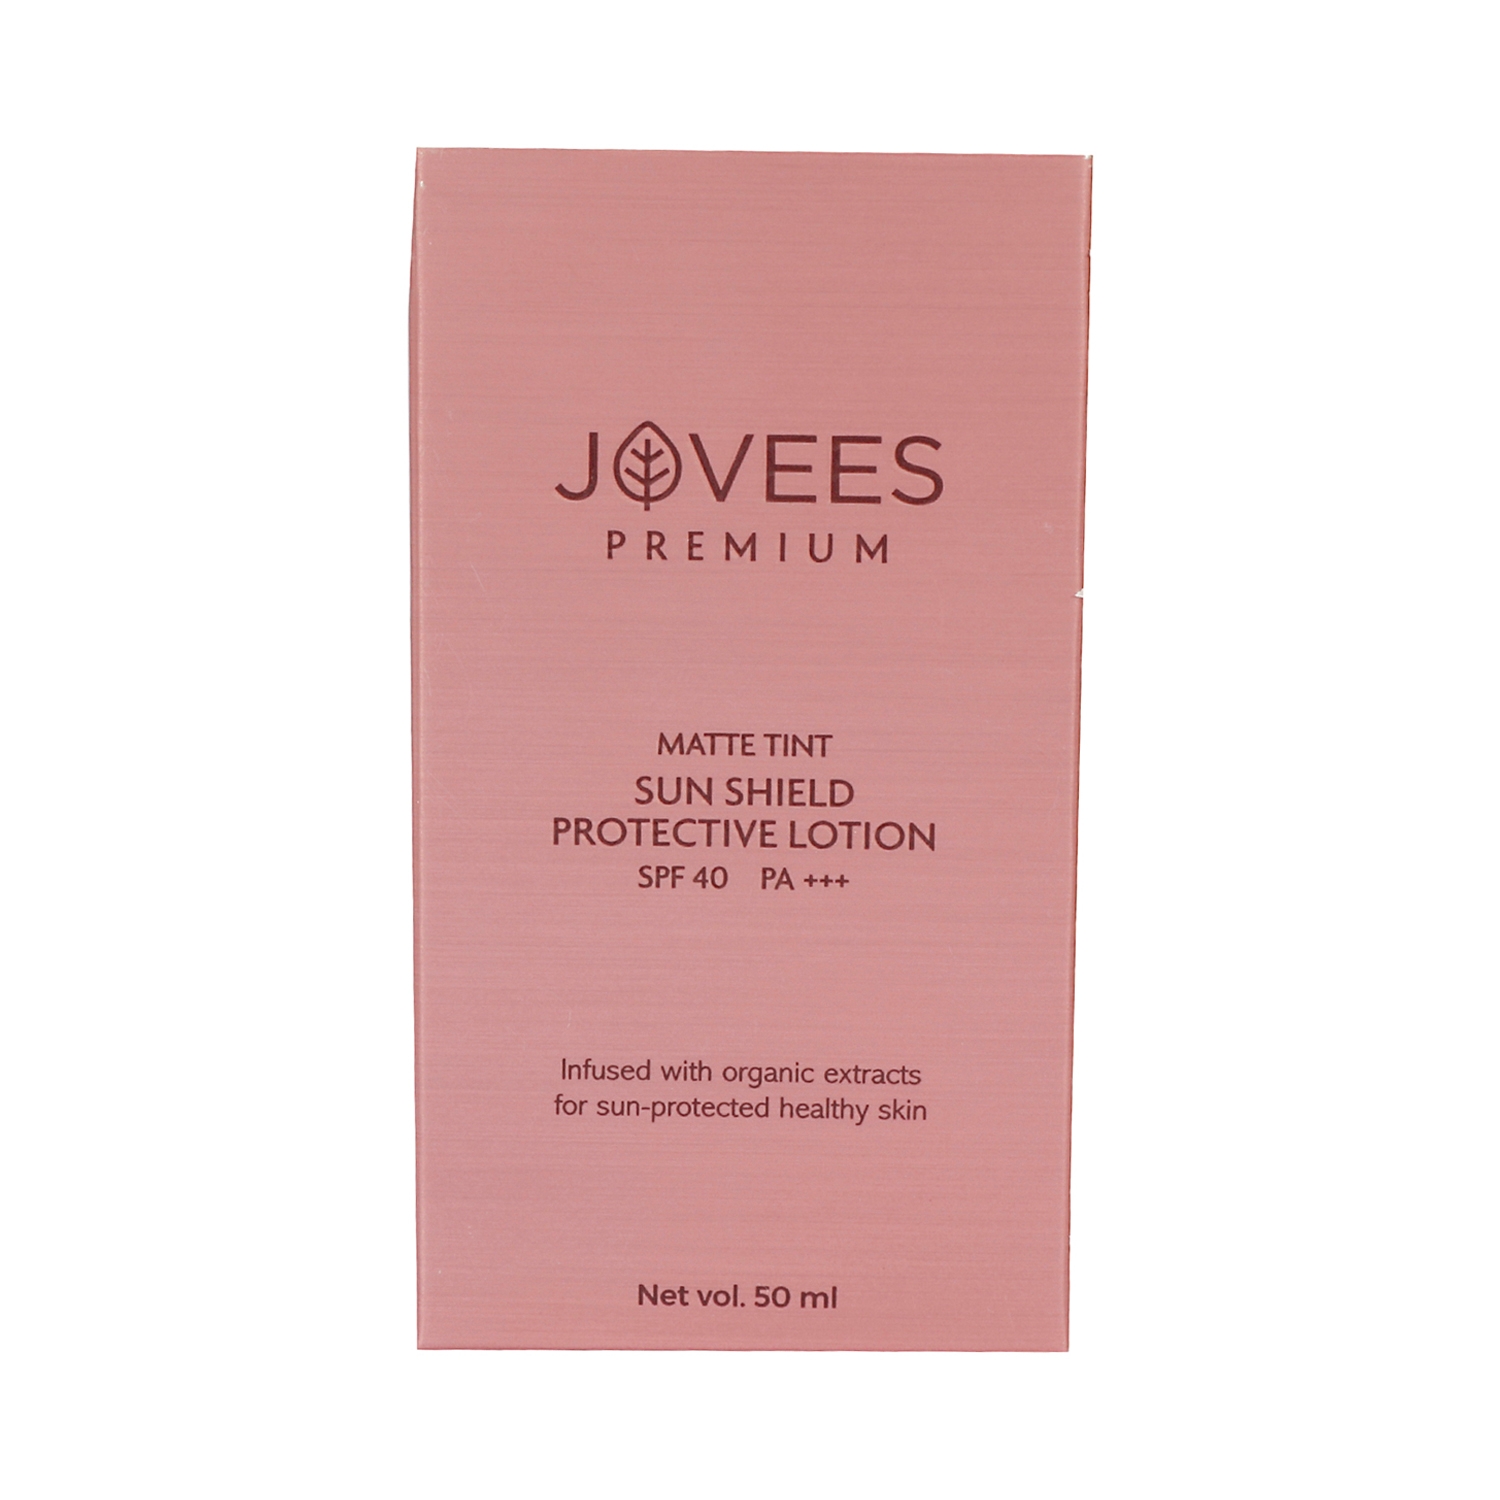 Jovees | Jovees Premium Matte Tint Sun Shield SPF 40 PA++ Protective Lotion (50ml)